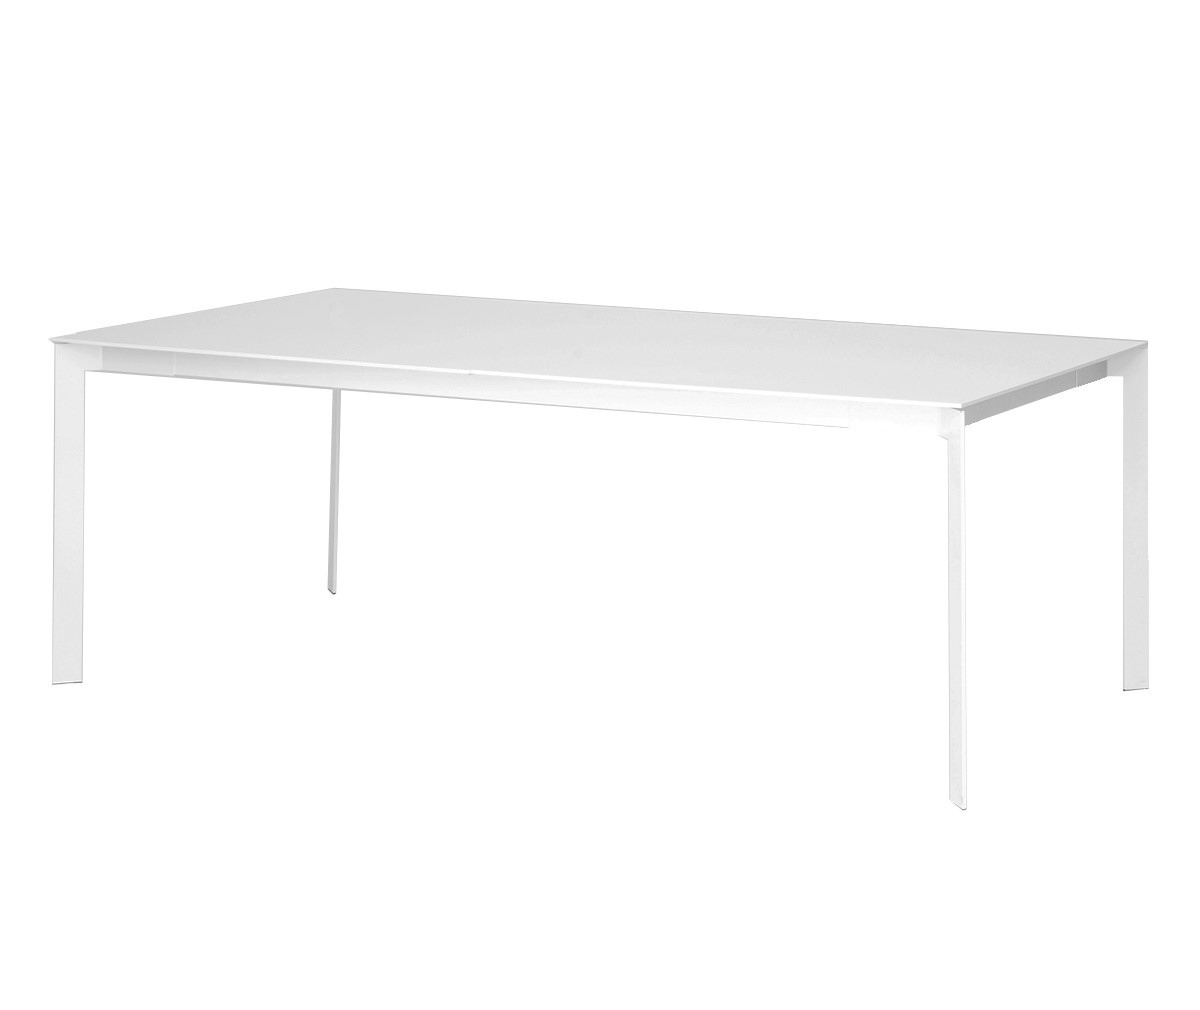 Muurame Viisto Dining Table White, 104 x 208 cm